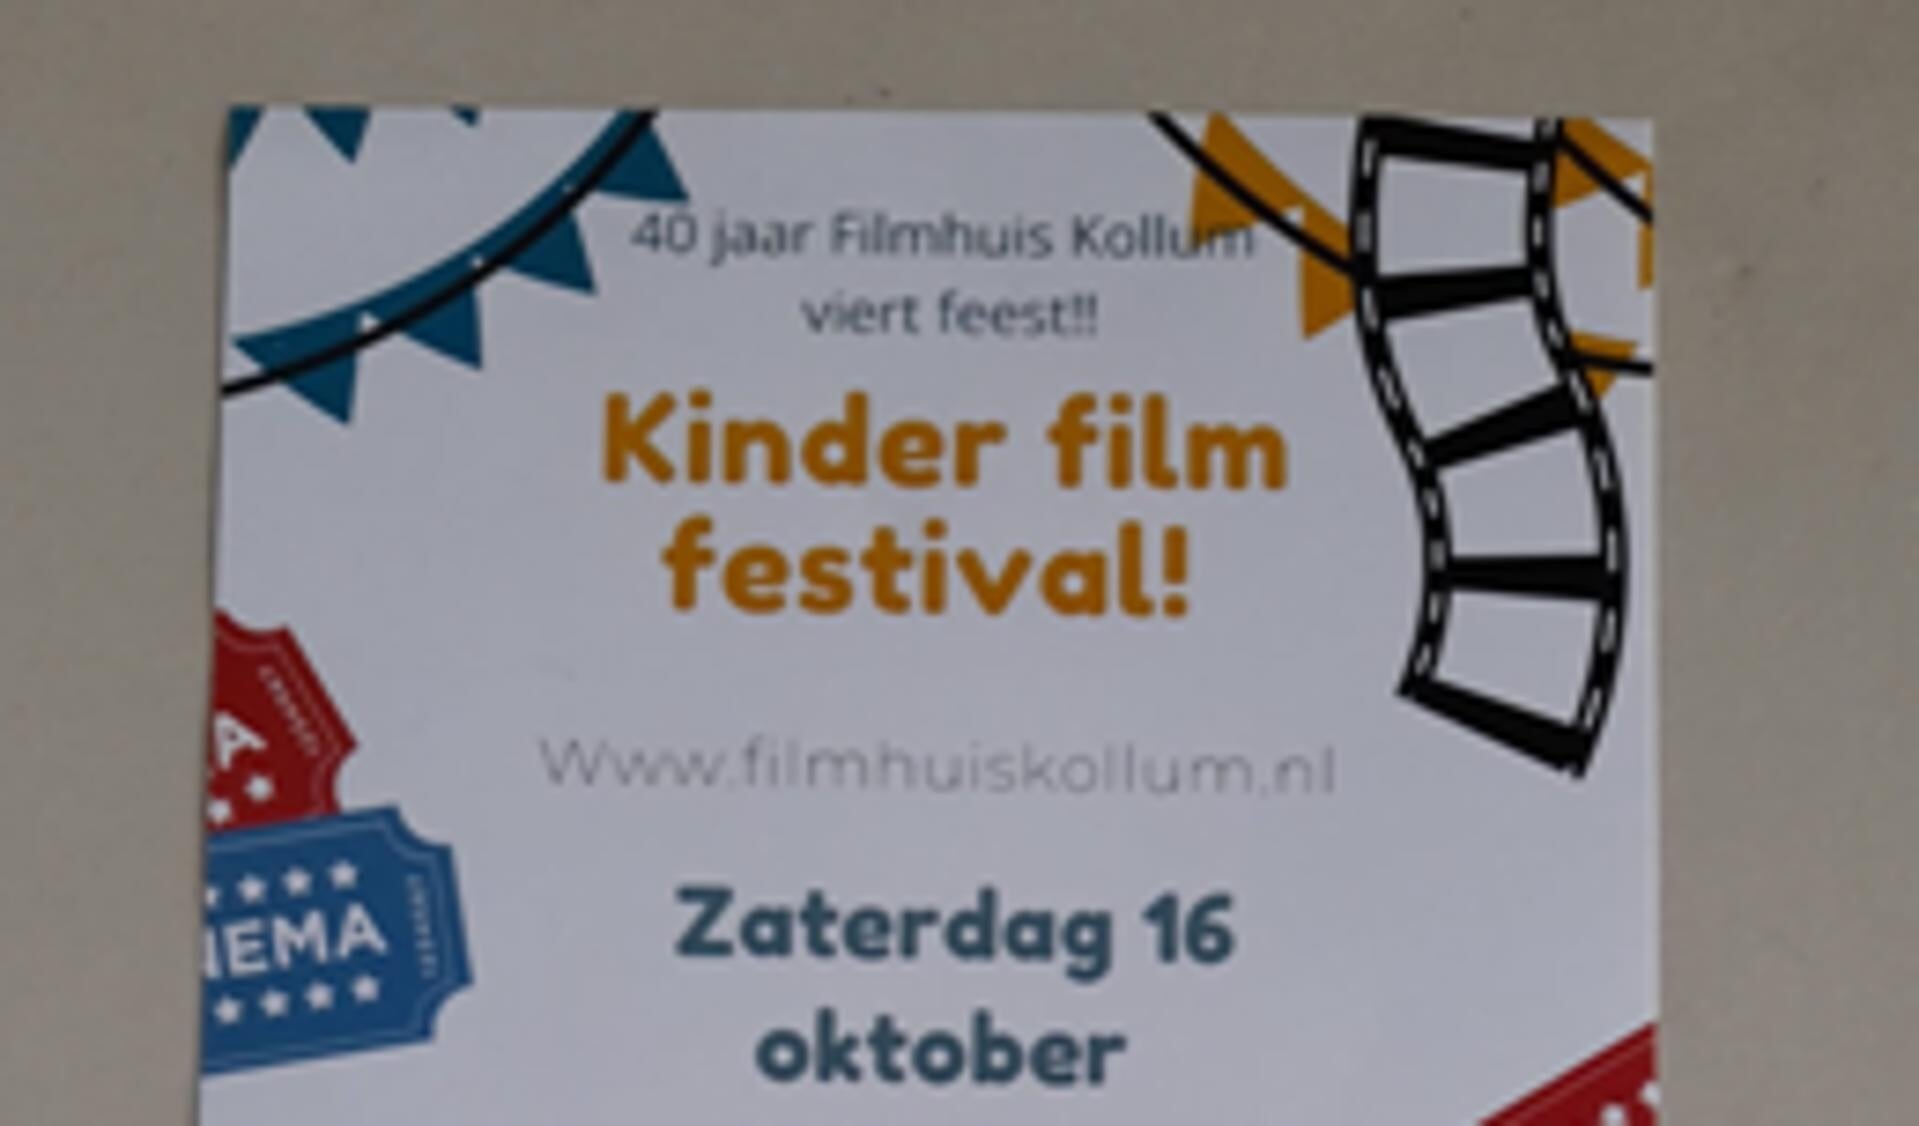 Het Kinderfilm Festival in Kollum is op zaterdag 16 oktober.